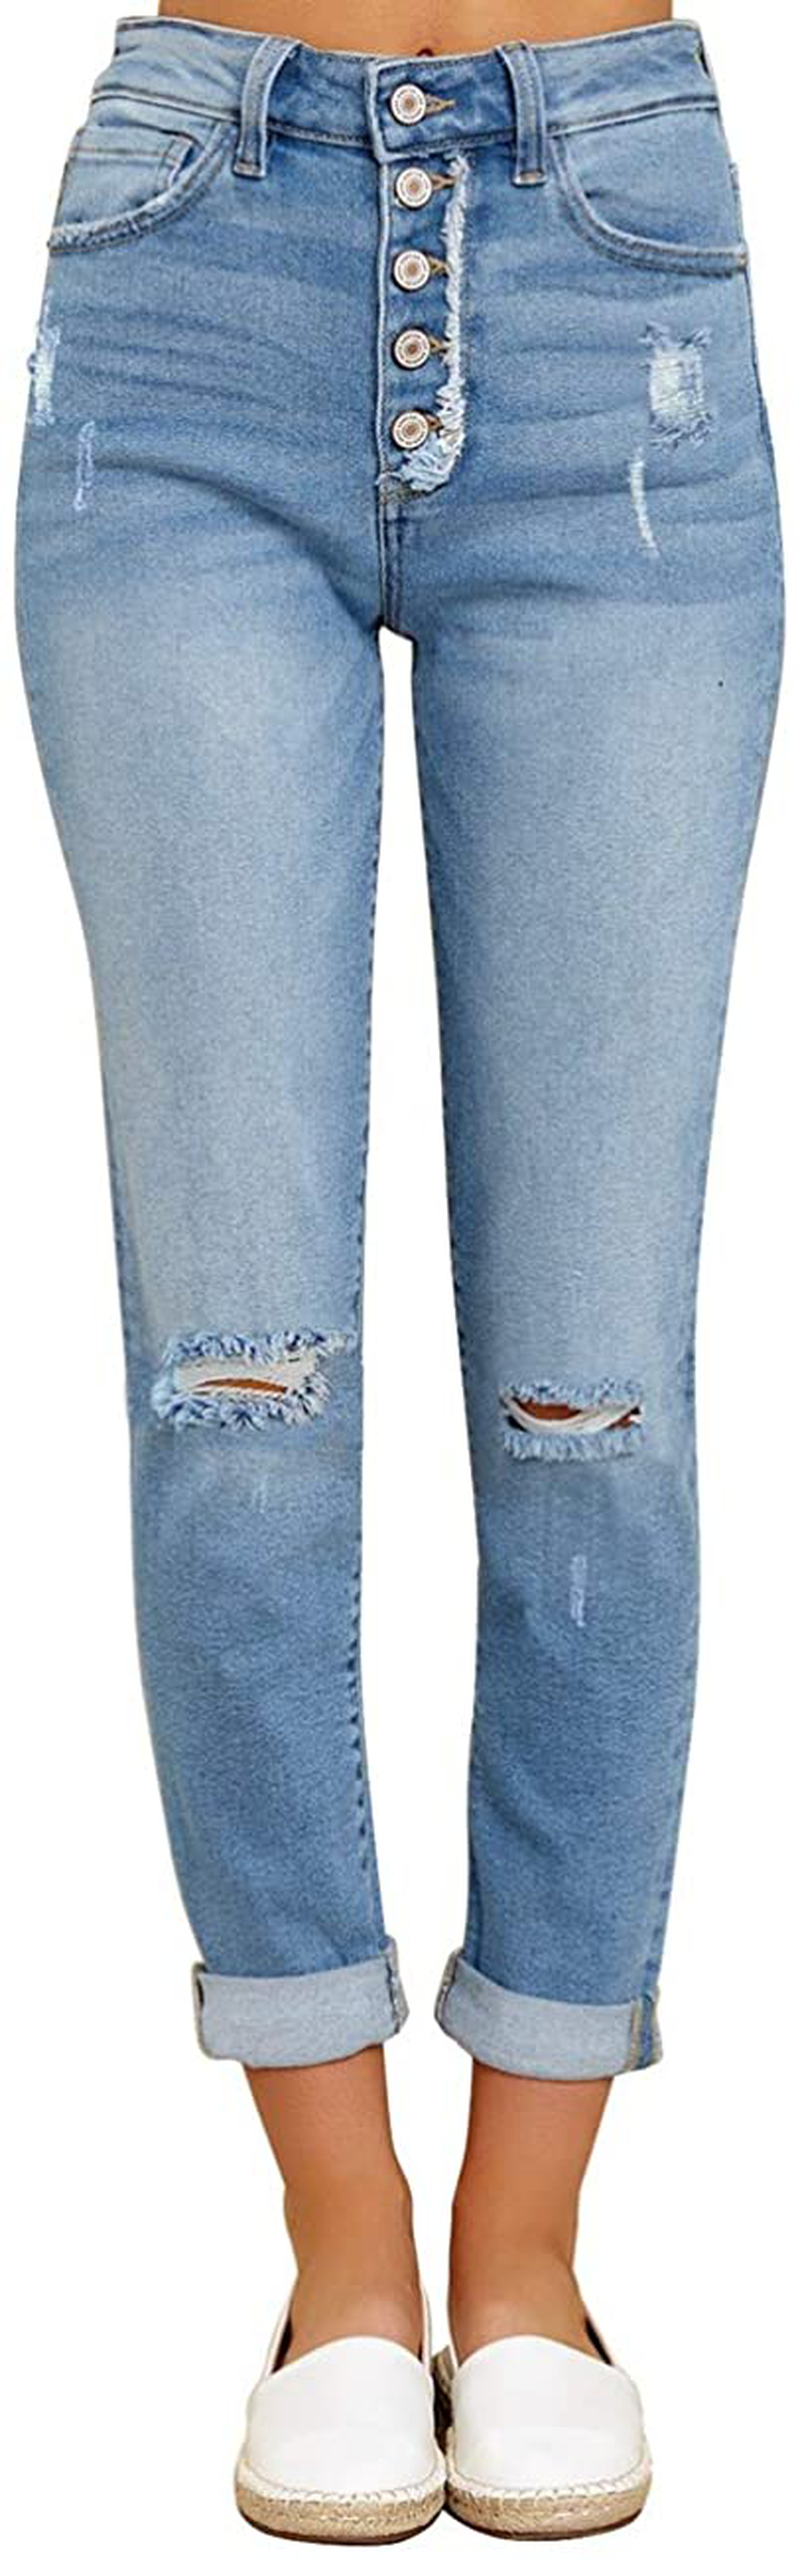 Vetinee Women's High Rise Skinny Jeans Ripped Slim Fit Stretch Denim Pants